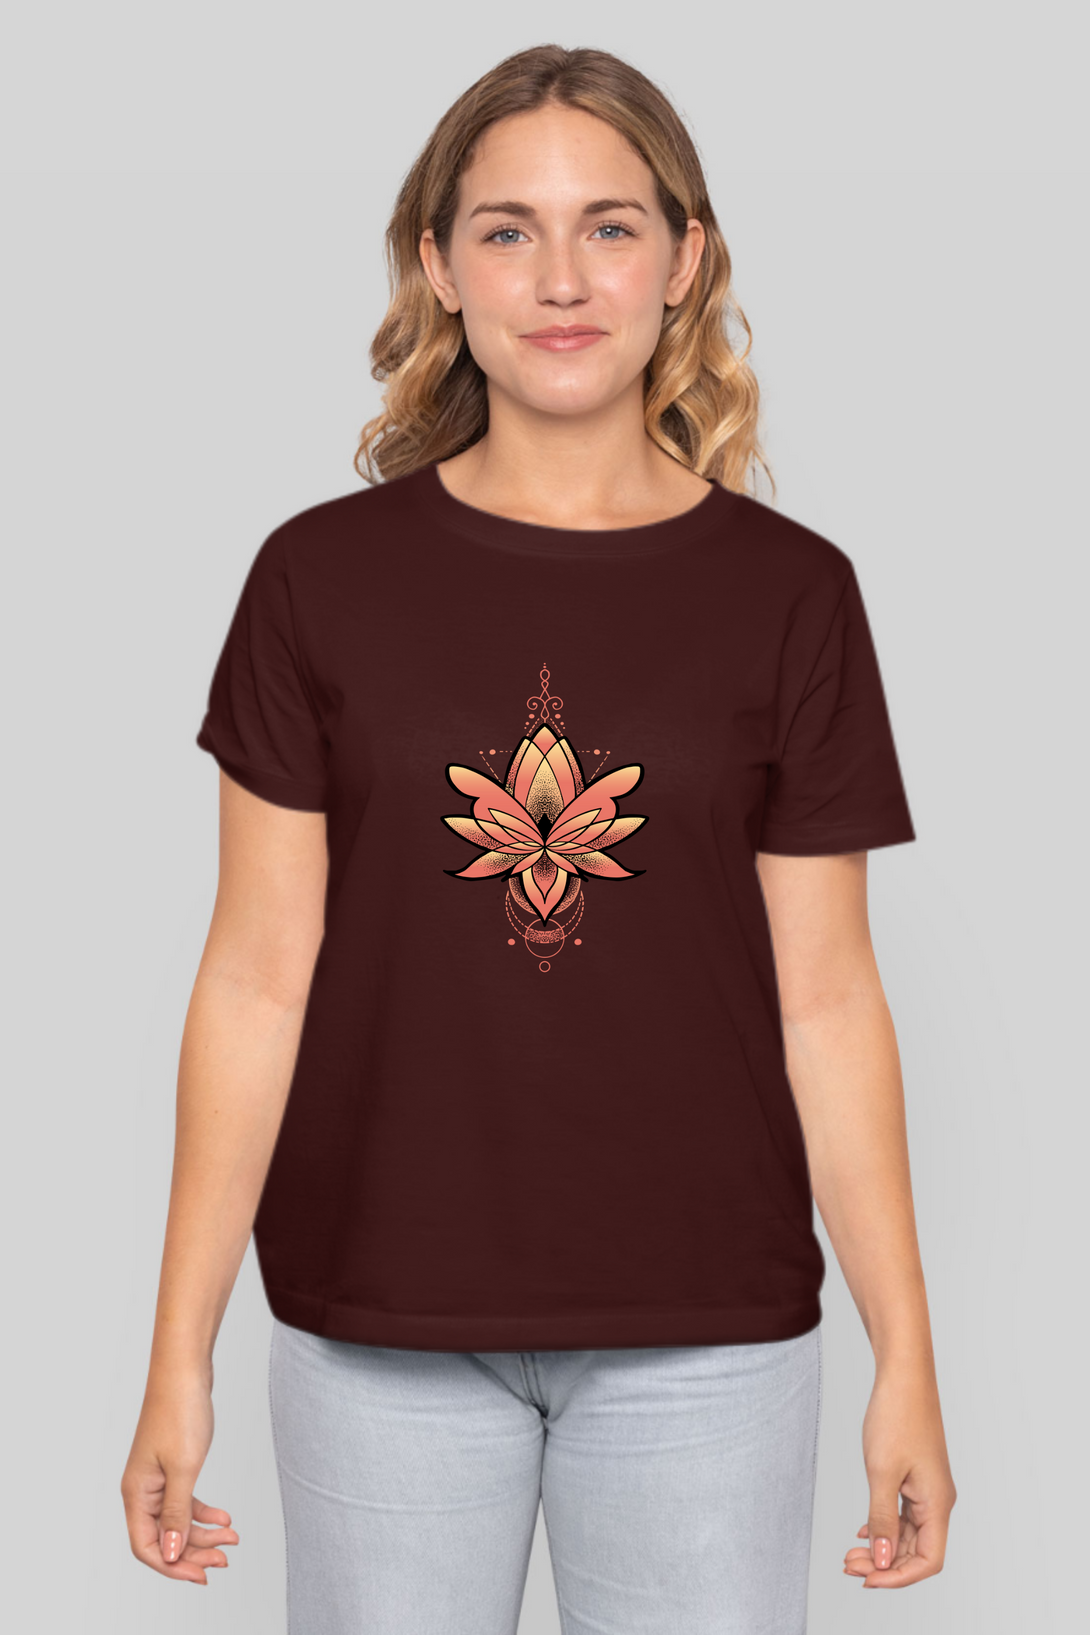 Geometric Lotus Printed T-Shirt For Women - WowWaves - 9